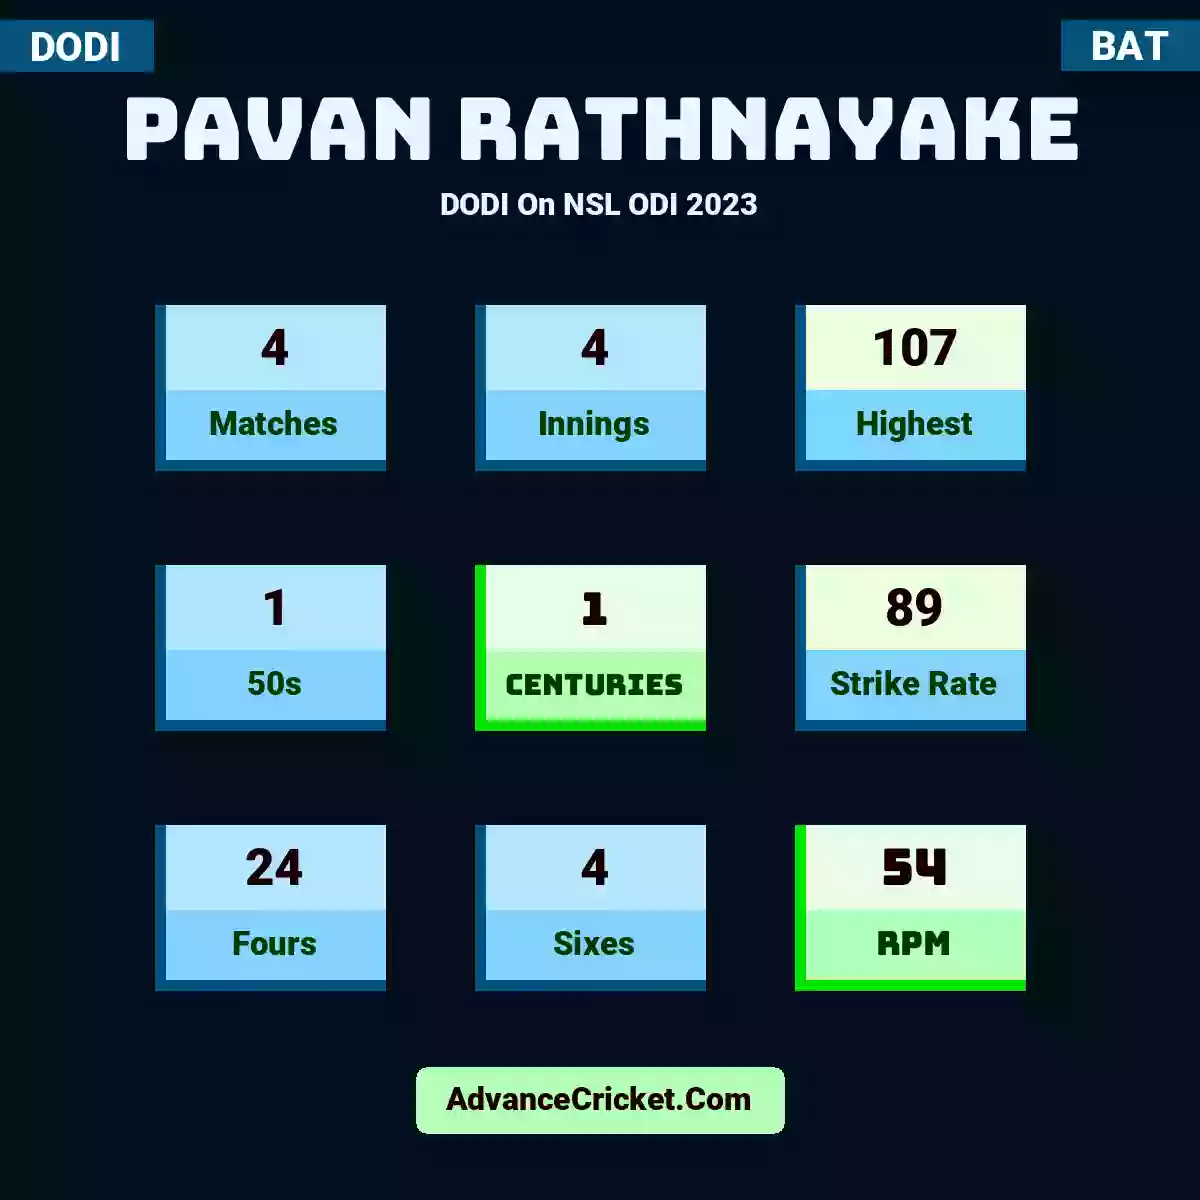 Pavan Rathnayake DODI  On NSL ODI 2023, Pavan Rathnayake played 4 matches, scored 107 runs as highest, 1 half-centuries, and 1 centuries, with a strike rate of 89. P.Rathnayake hit 24 fours and 4 sixes, with an RPM of 54.